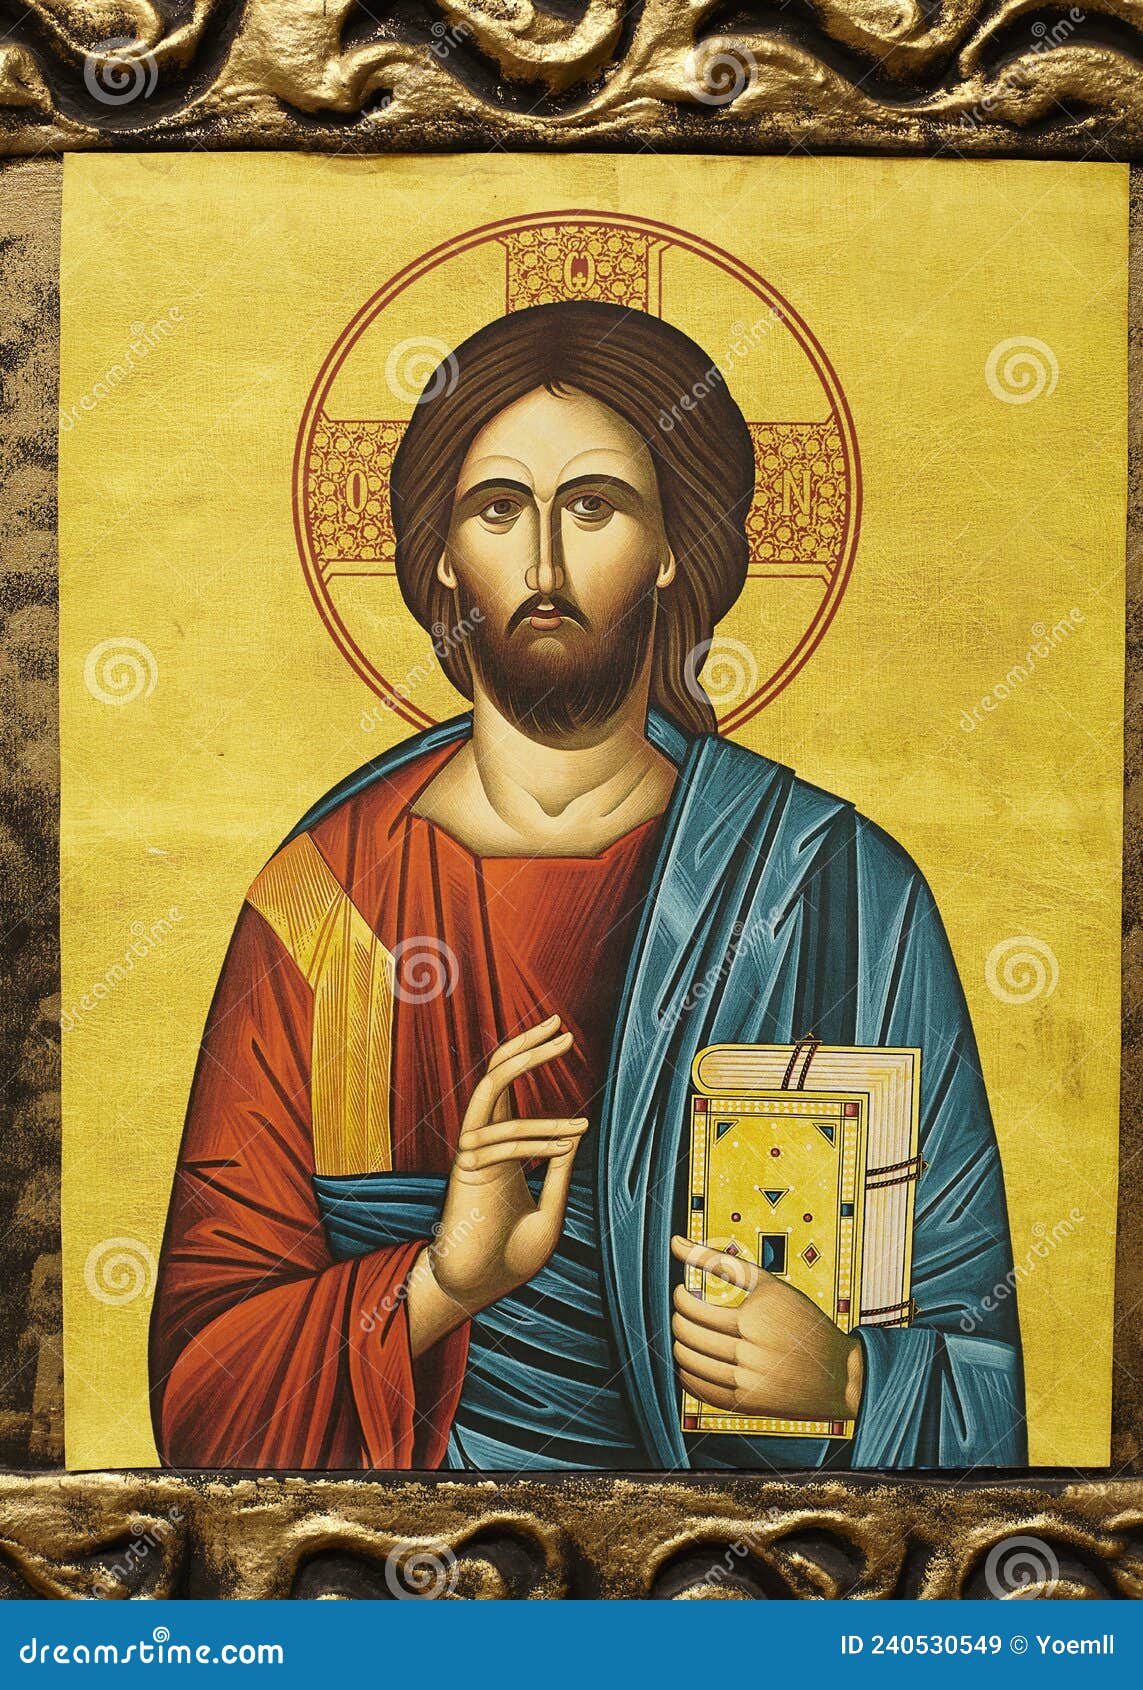 jesus christ greek orthodox icon, byzantine icon